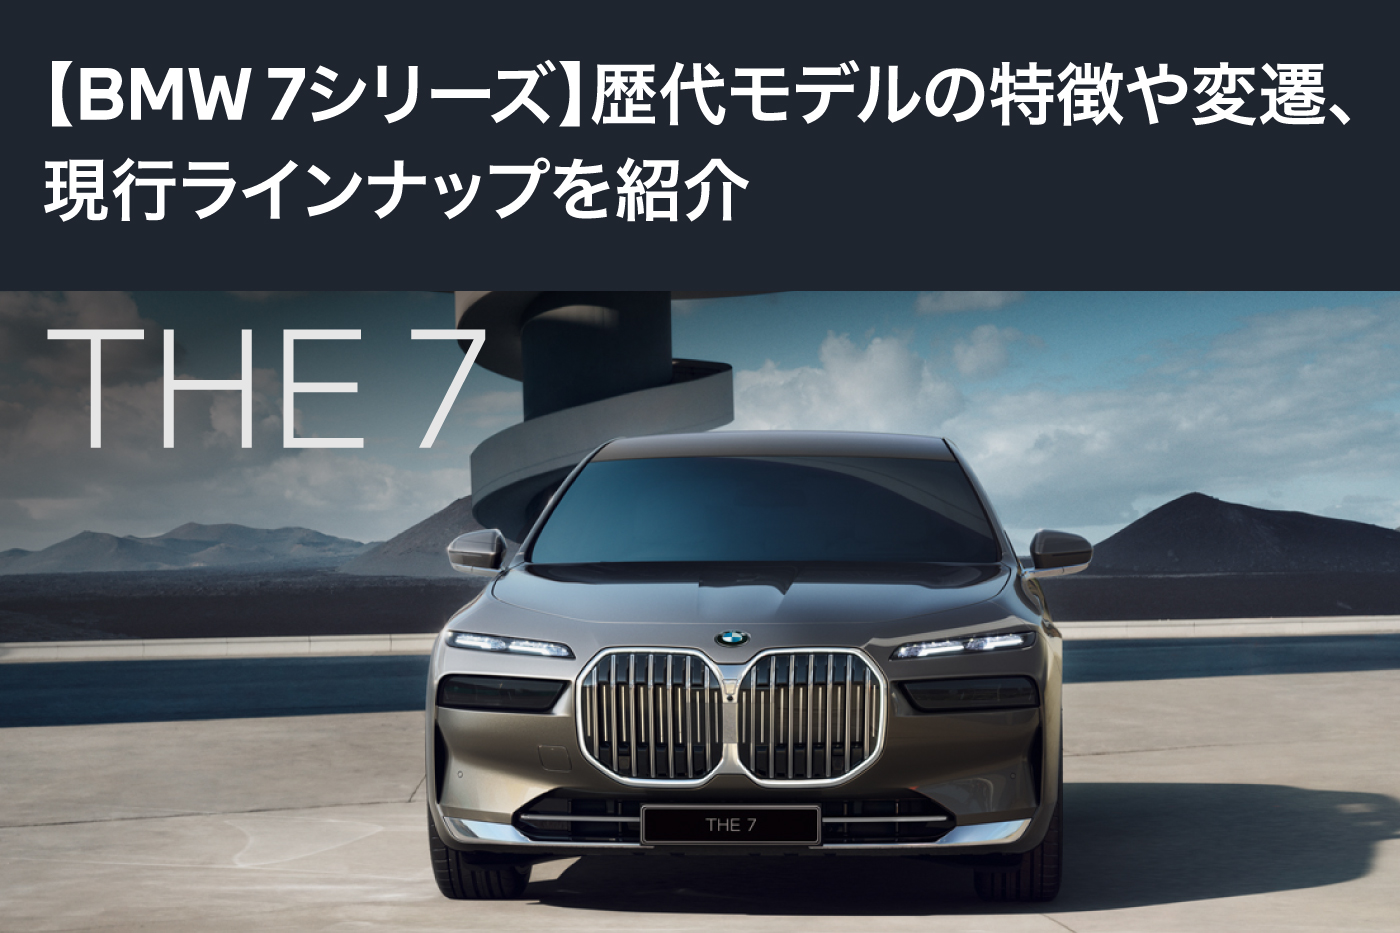 BMW 7シリーズ】歴代モデルの特徴や変遷、現行ラインナップを紹介 